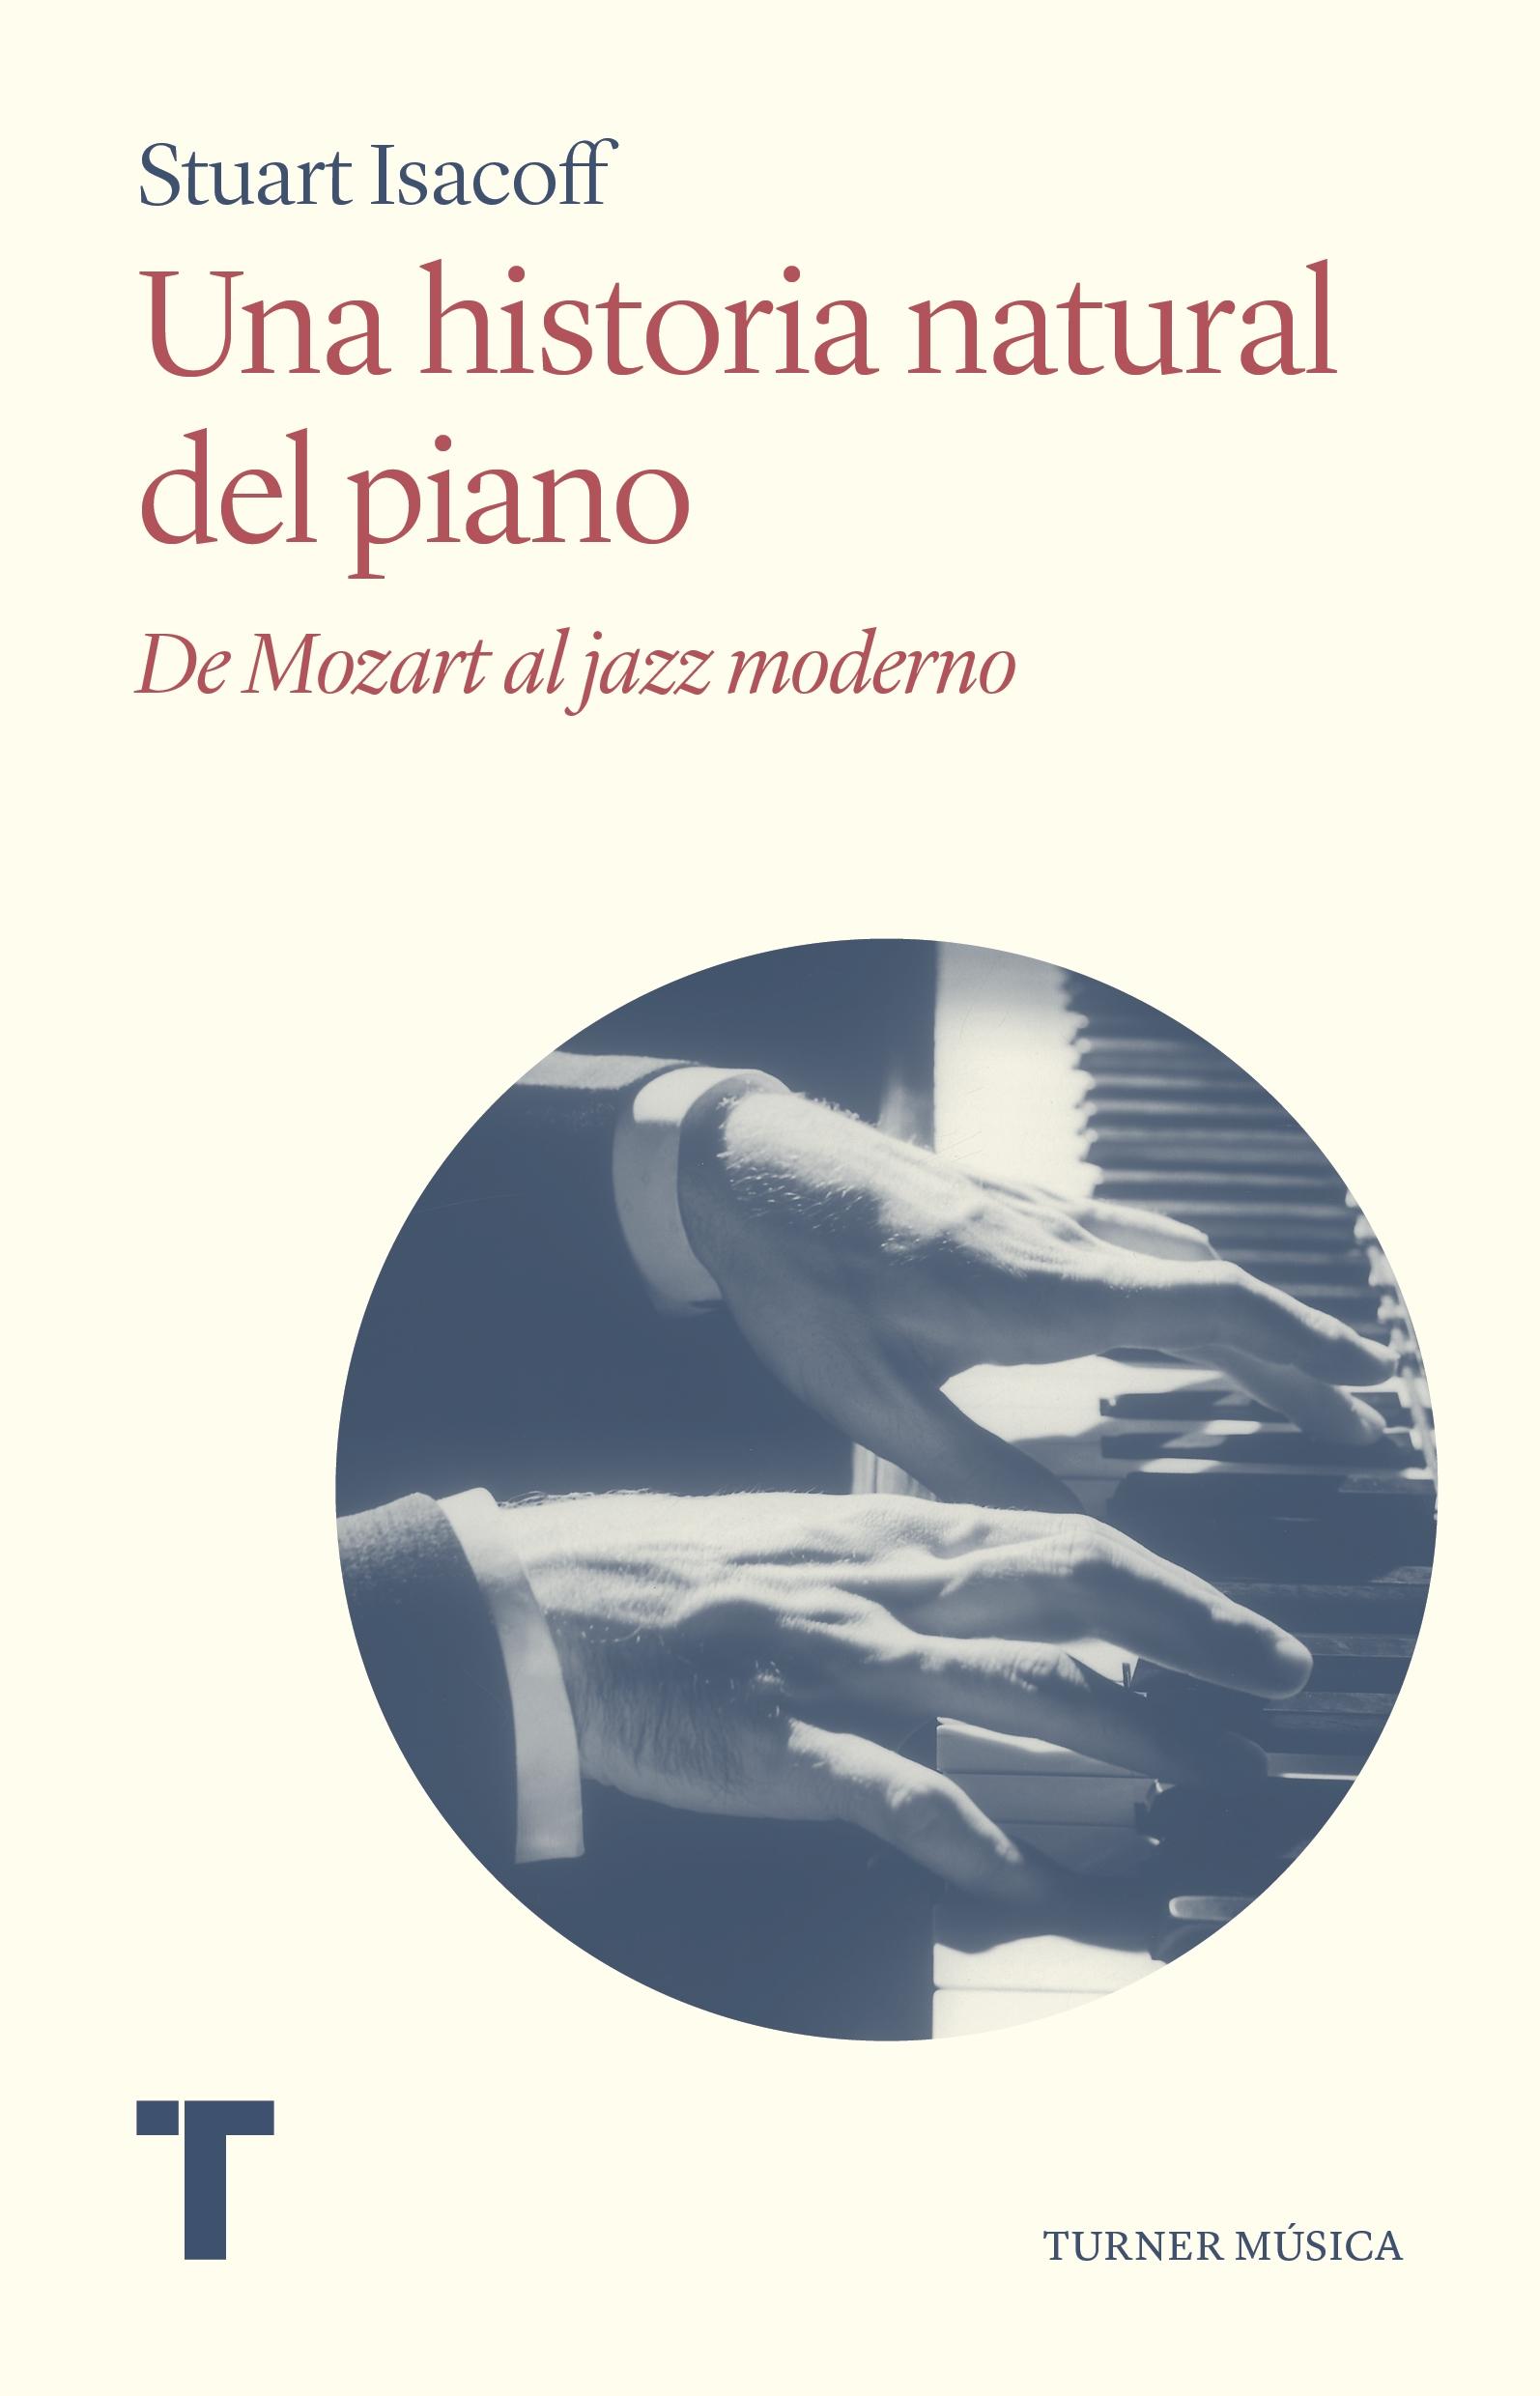 Historia natural del piano, Una "De Mozart al jazz moderno"